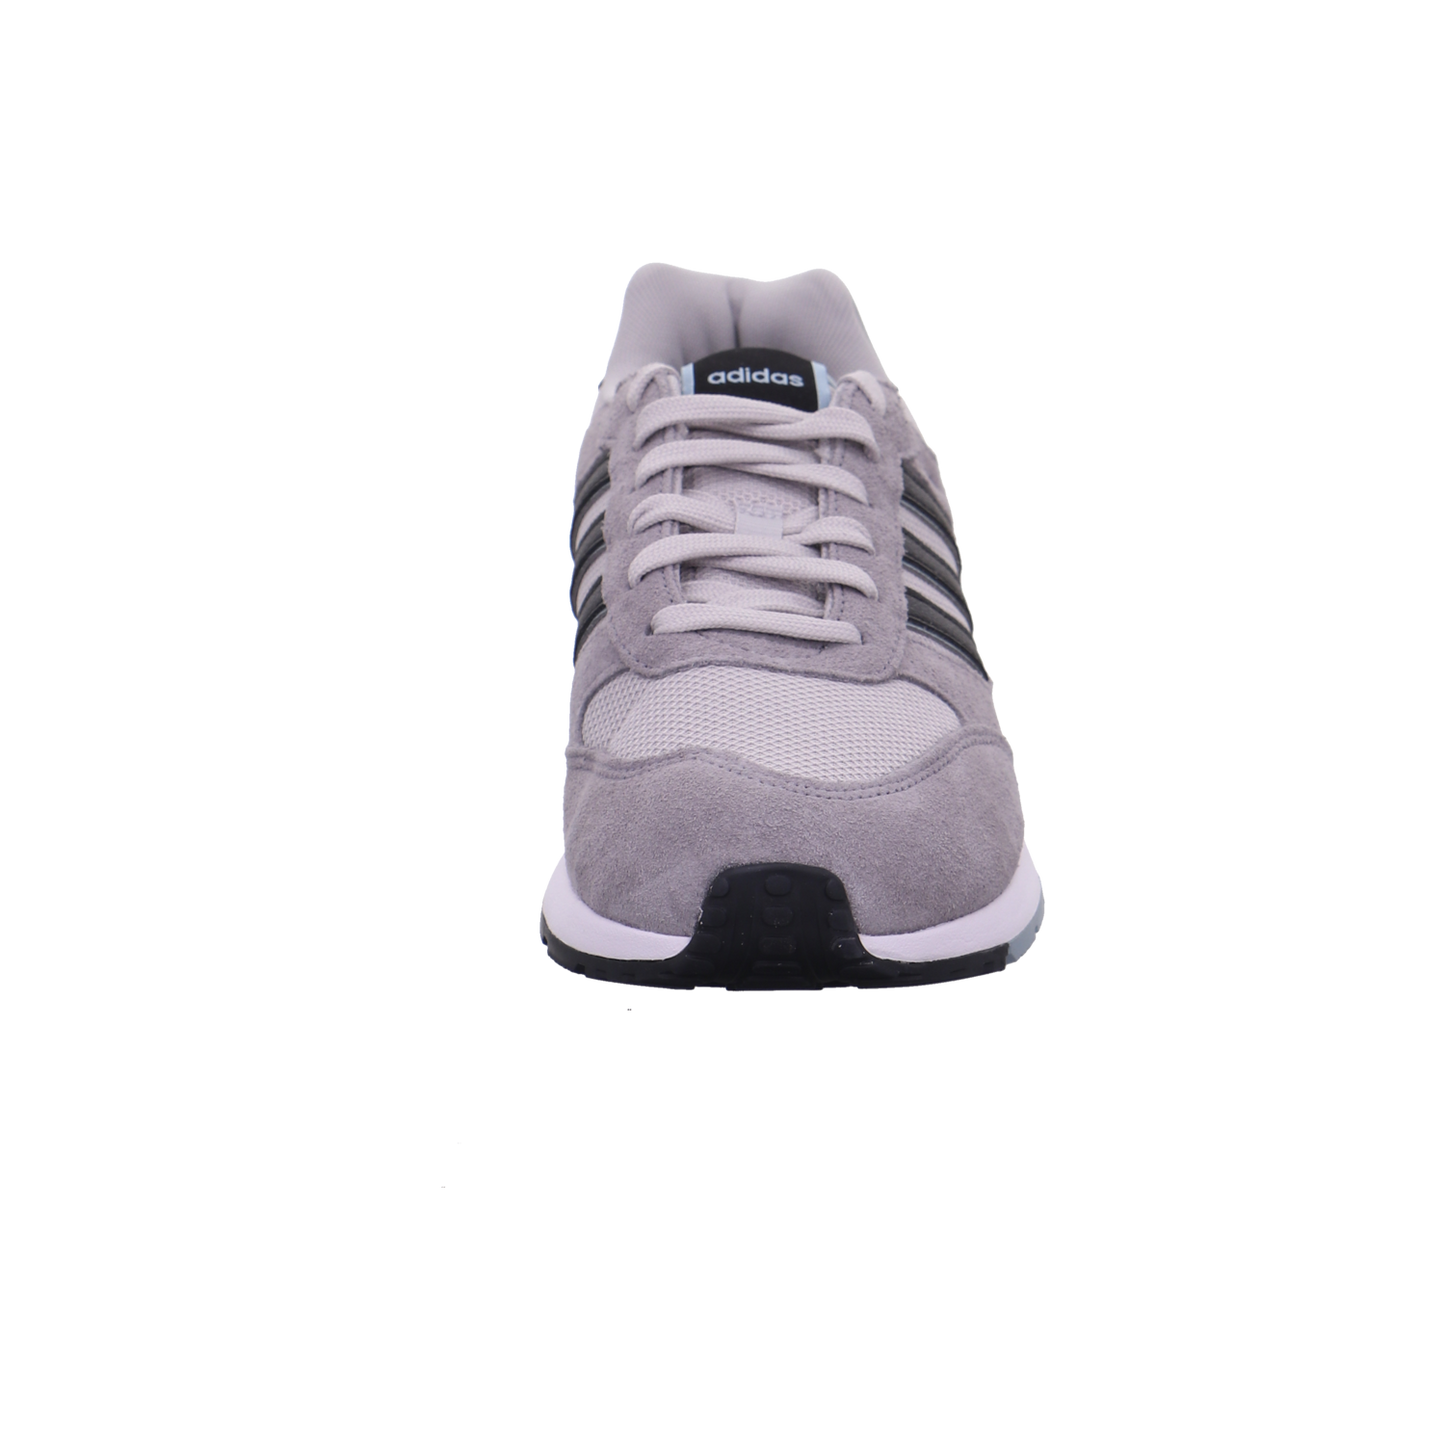 Adidas Sneaker grau kombi Bild3